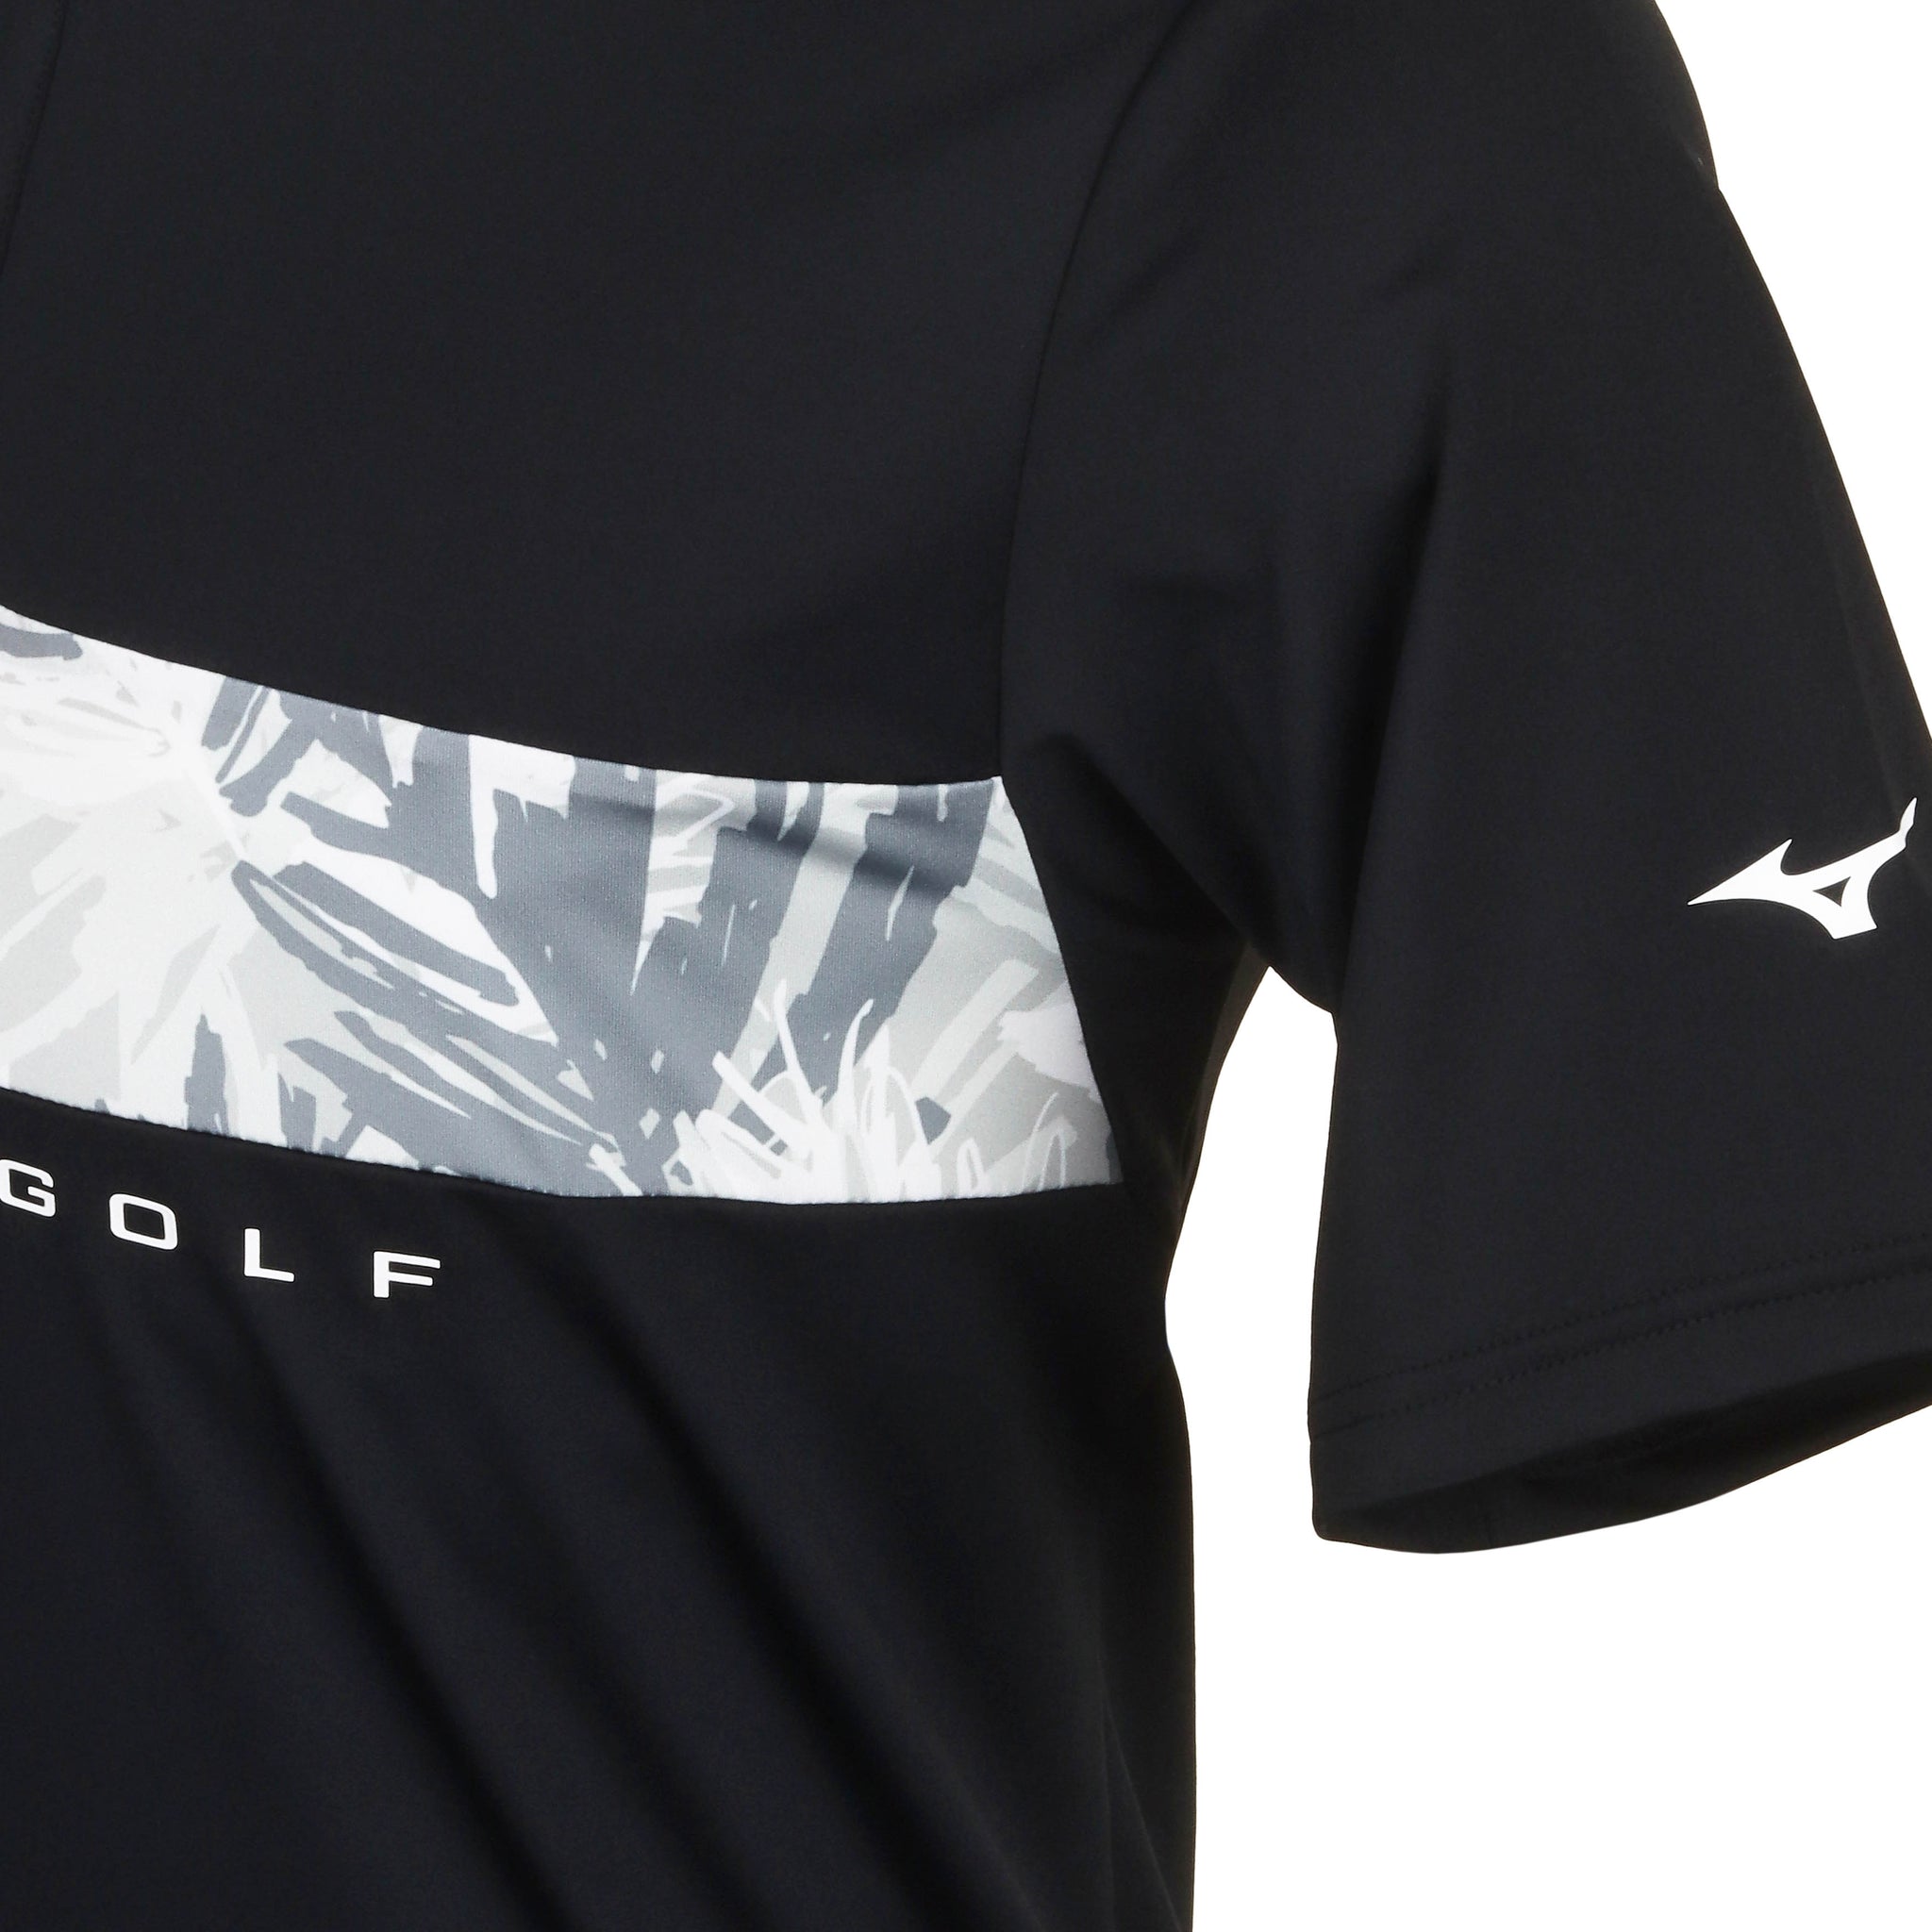 Mizuno Golf Cali Stripe Polo Shirt